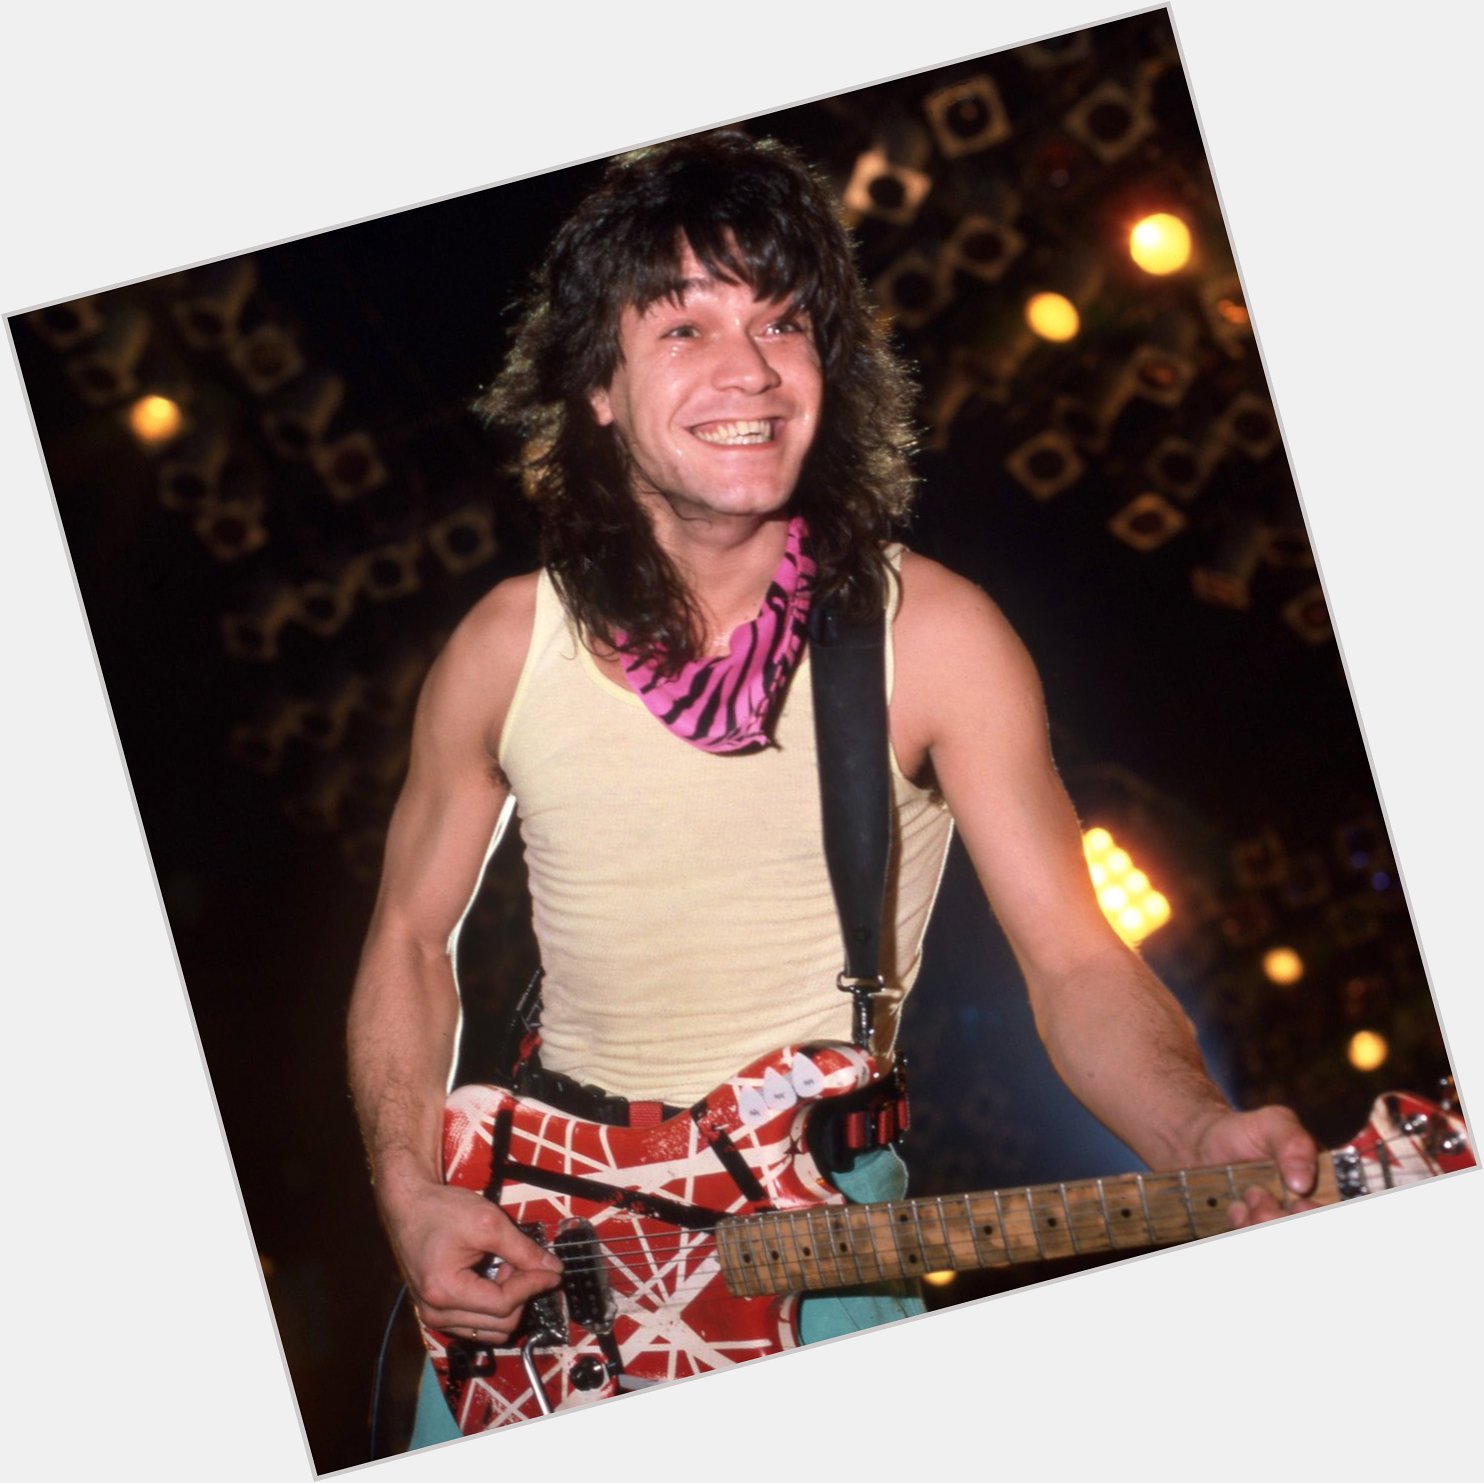 Happy Birthday in Heaven, King. We miss you. Eddie Van Halen 
1955-2020 